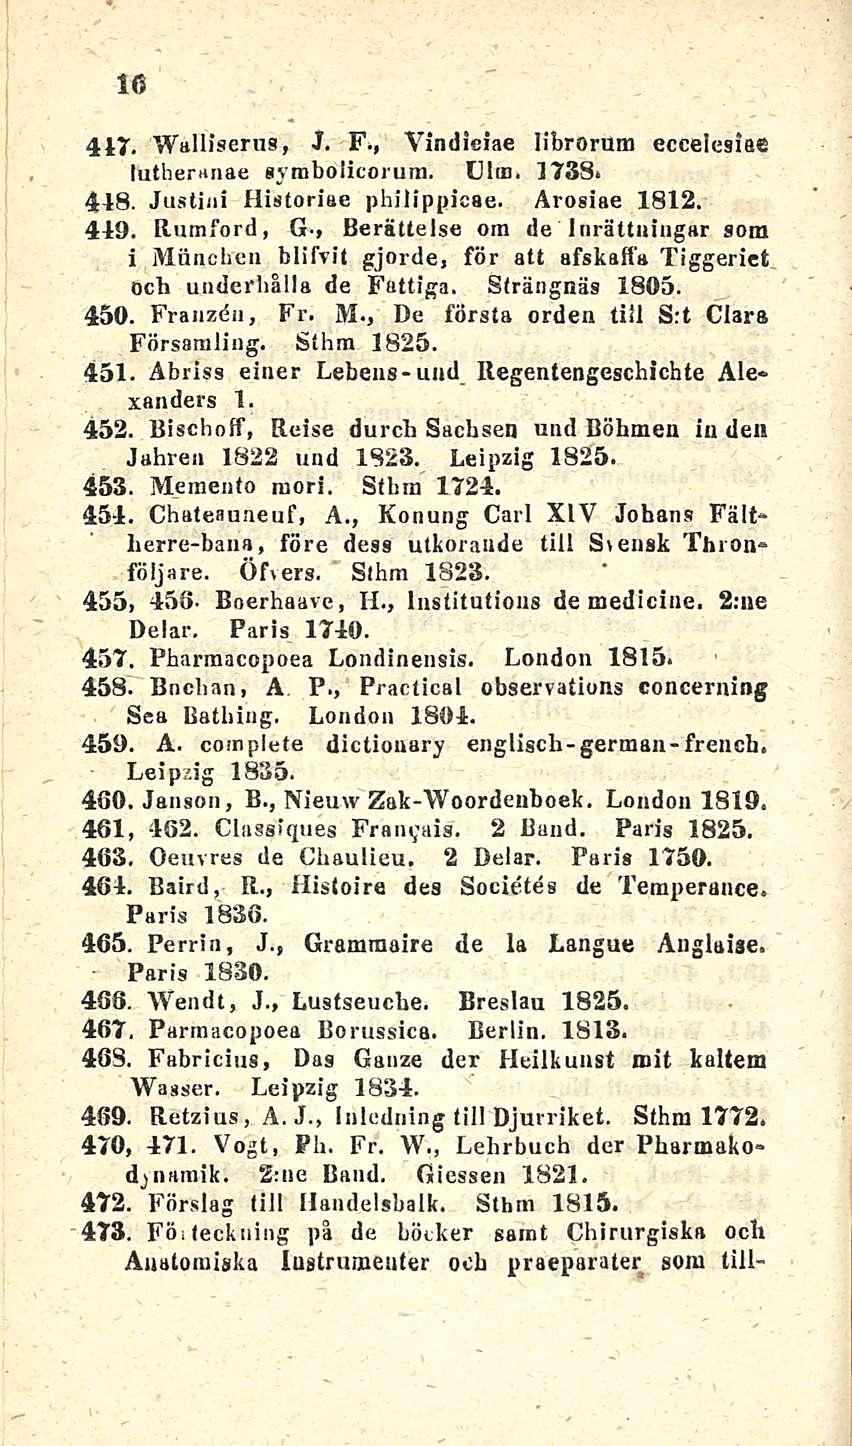 16 417. Walliserus, J. F., Vindieiae librorura ecceleslac lutheranae syrabolicorum. Uim. 1738» 418. Justini Historiae philippicae. Arosiae 1812. 449.